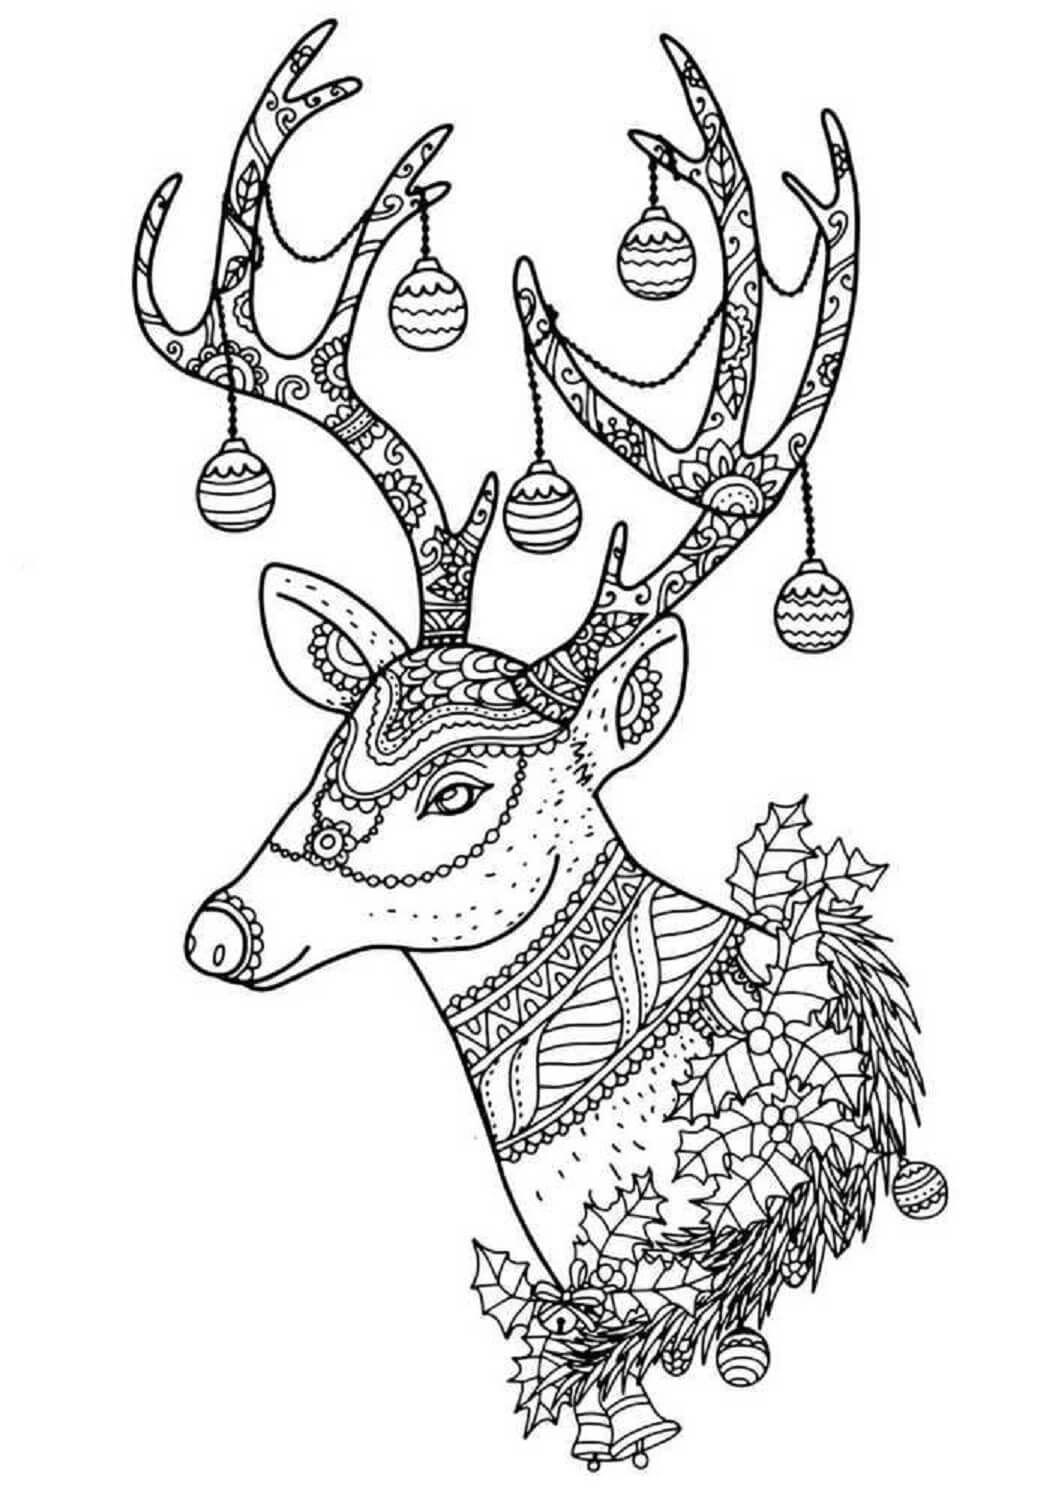 Mandala Portrait of Reindeer Coloring Page Mandalas